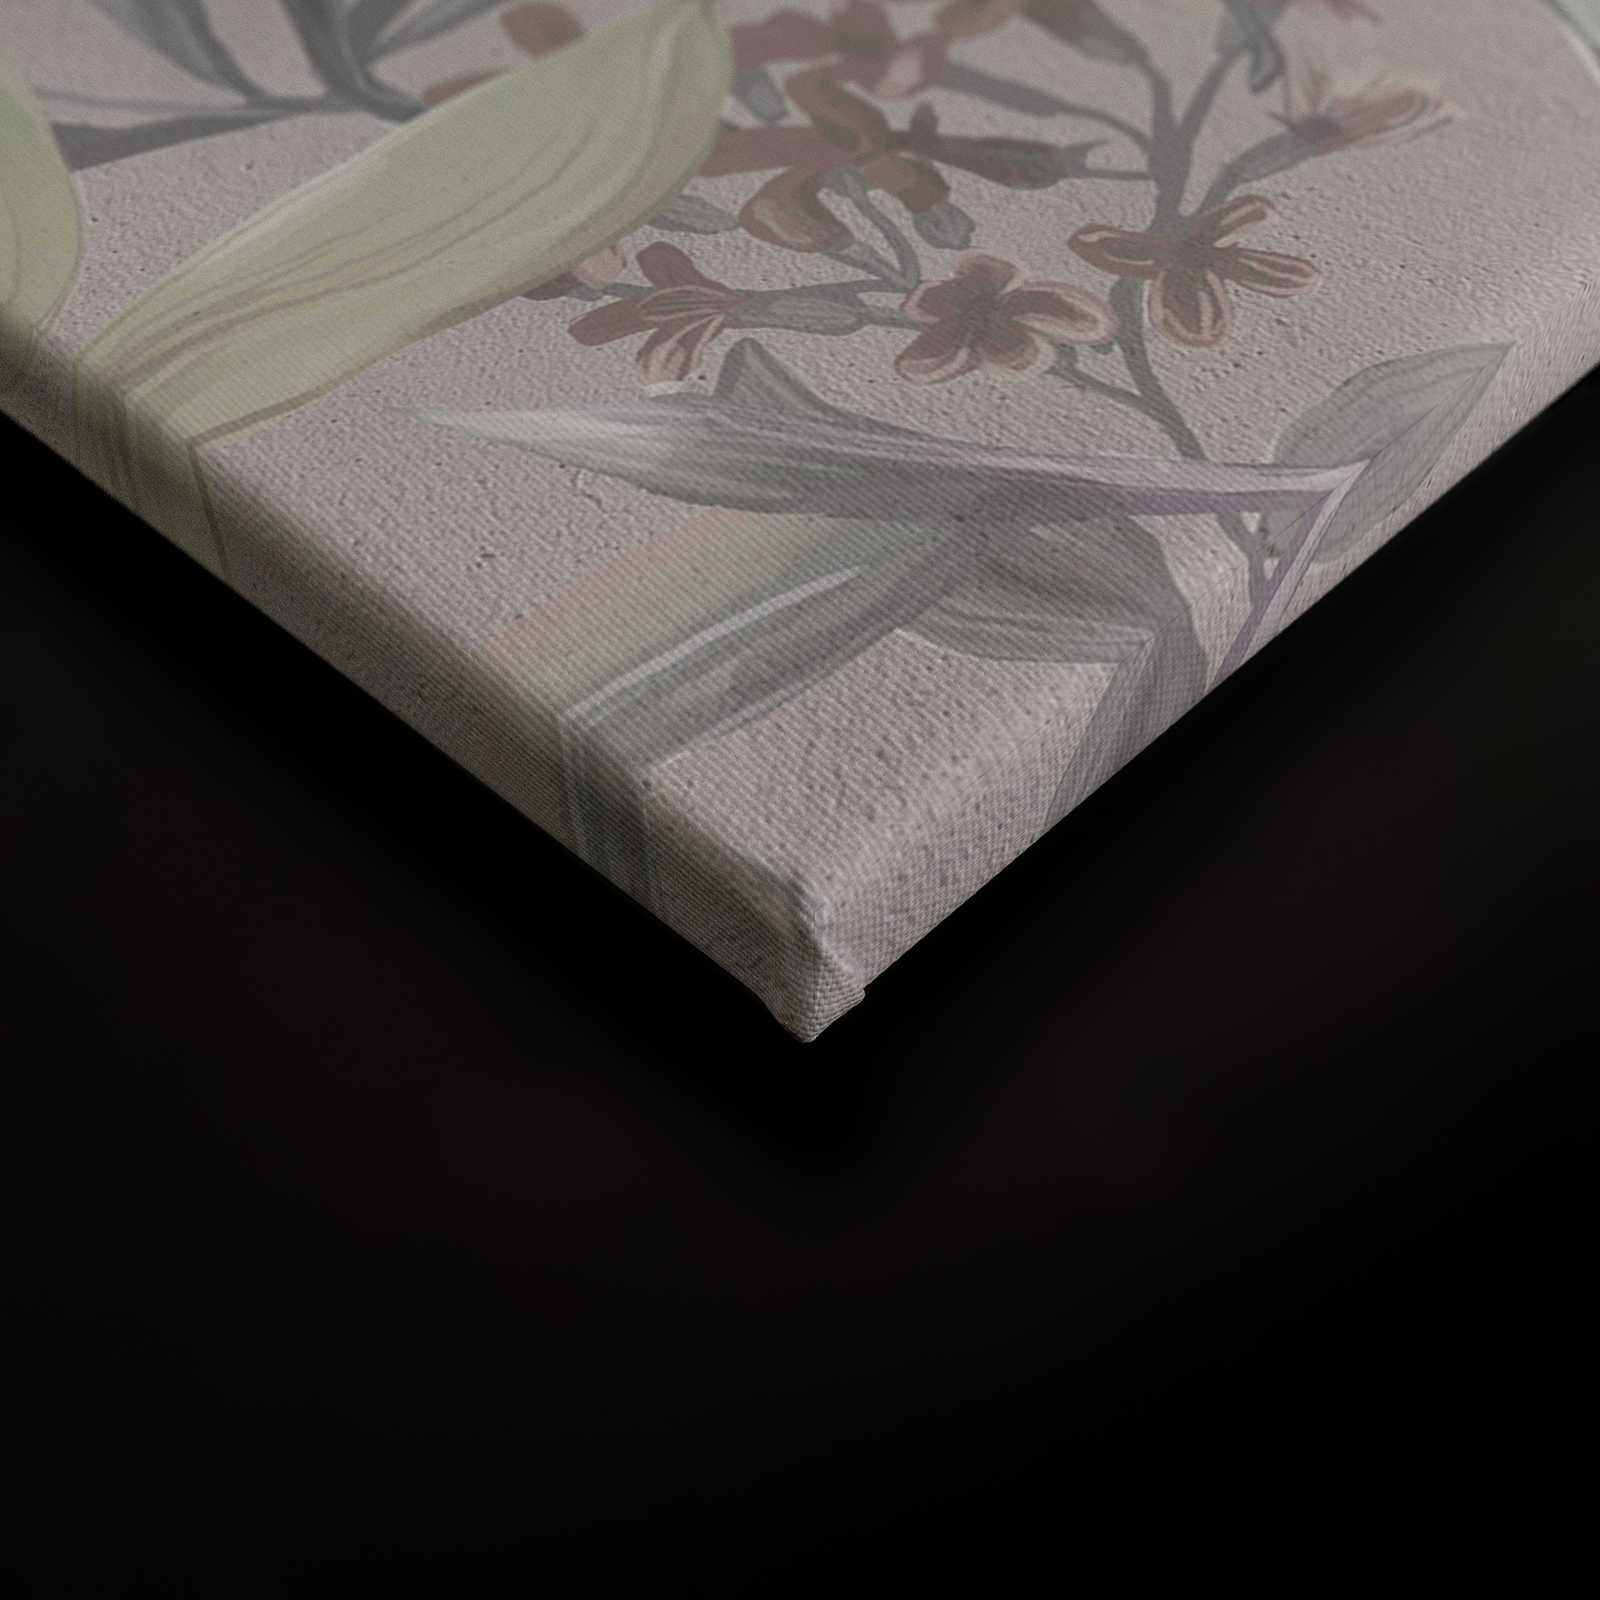             Pittura su tela Jungle floreale disegnata | grigio, bianco - 1,20 m x 0,80 m
        